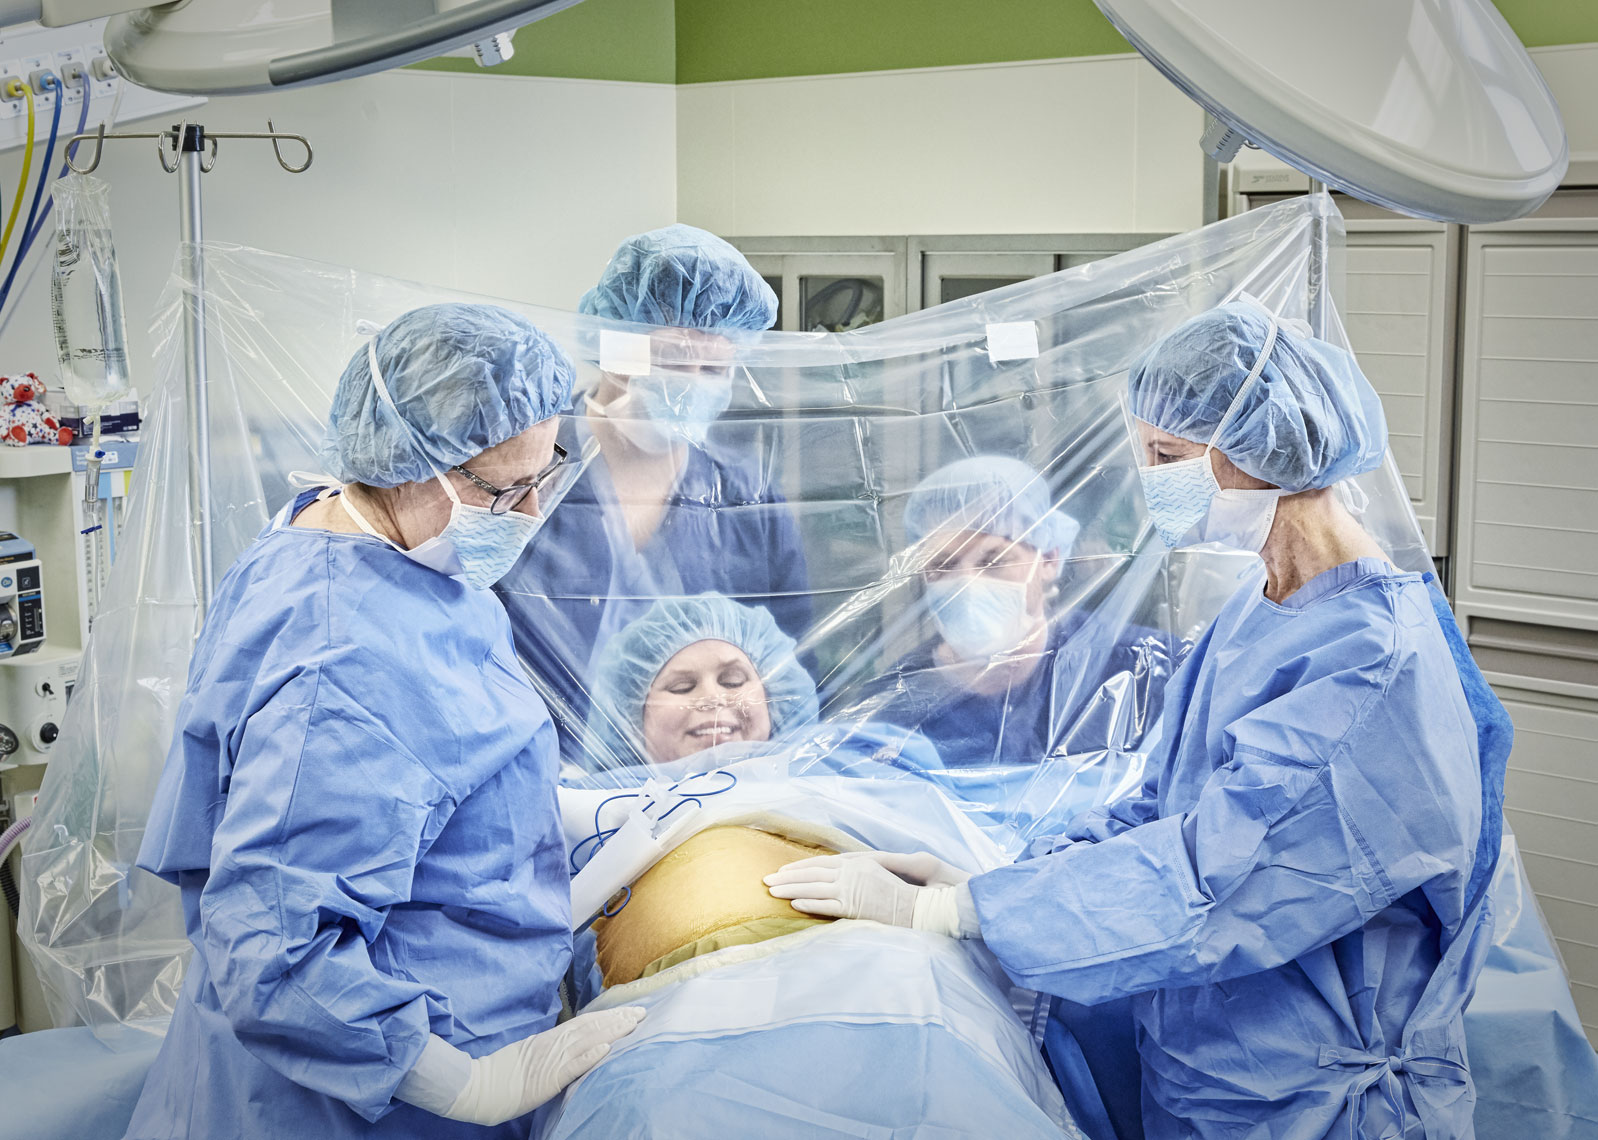 3M/Operation/c-section/drape/medical photo